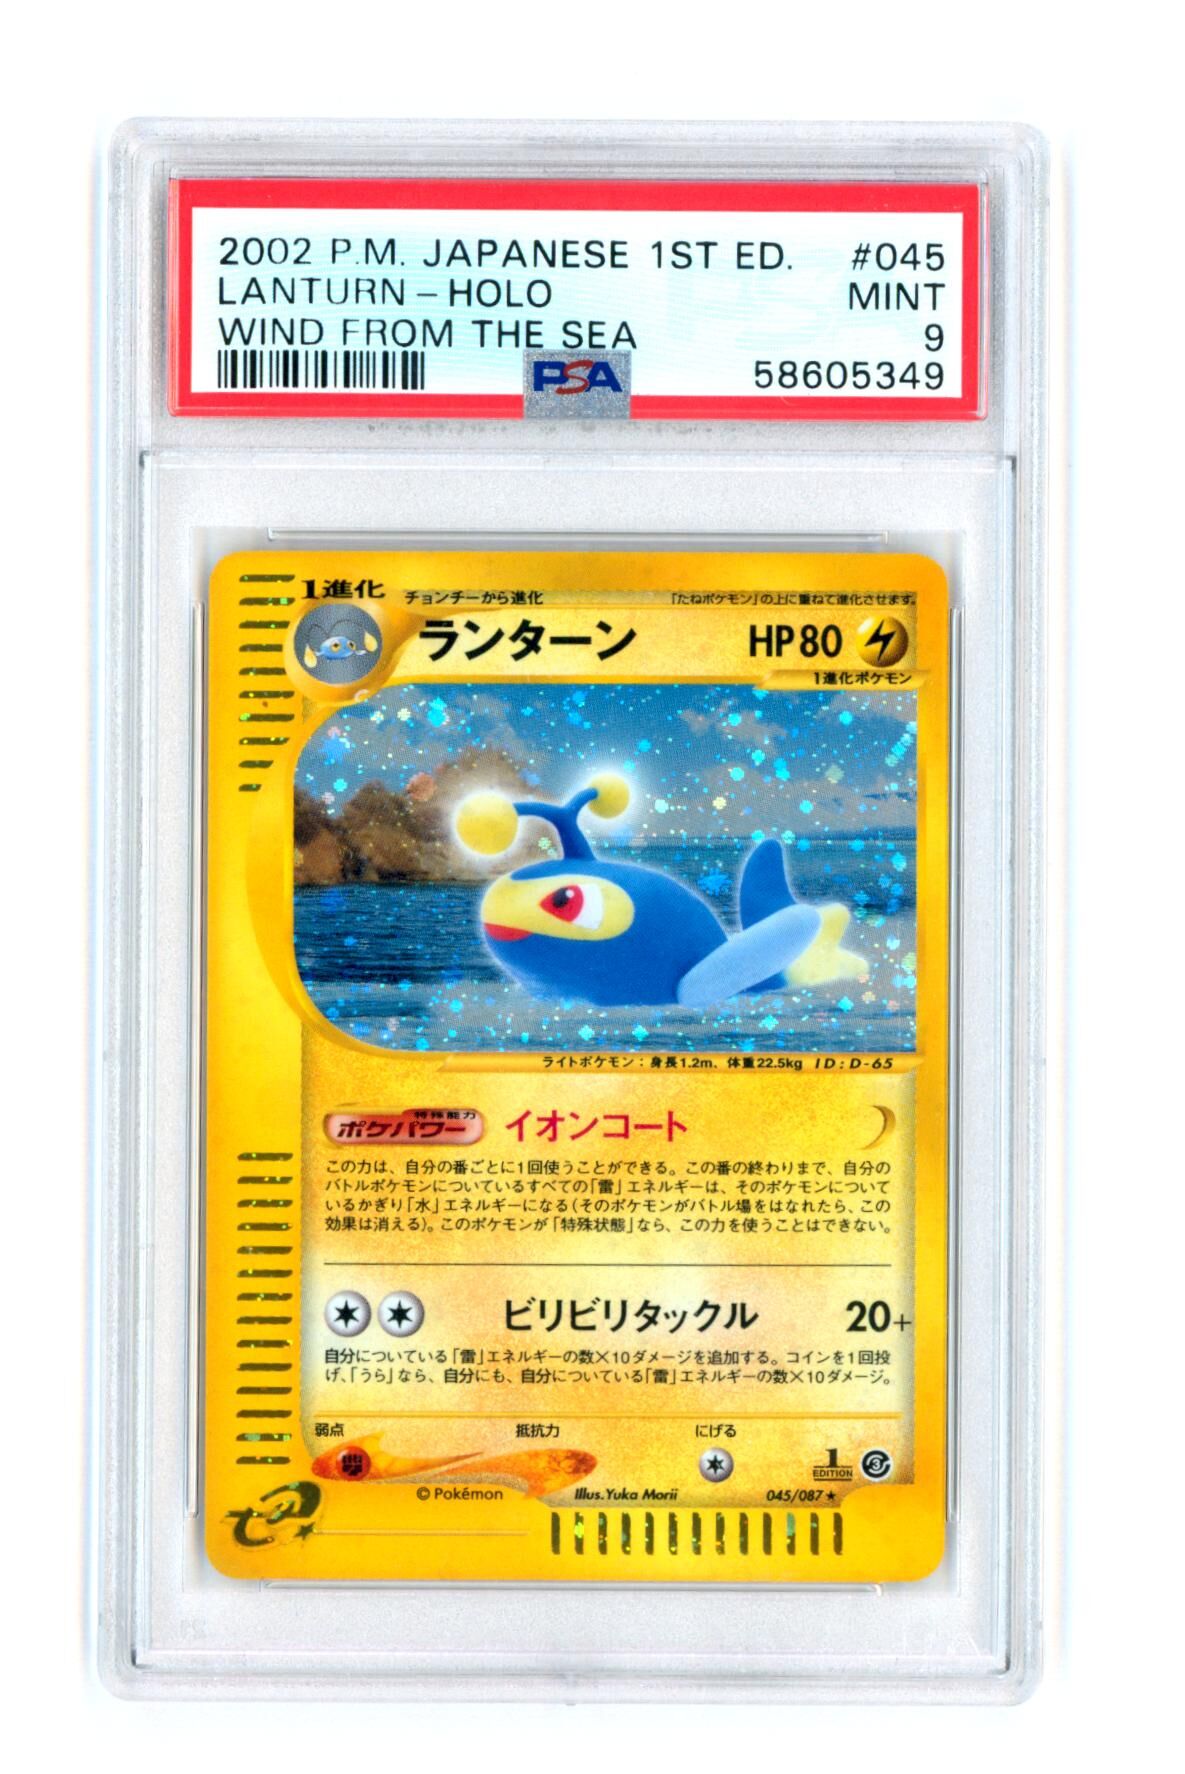 Lanturn 045/087 - Wind from the sea - Japanese 1ST ED. - Holo - PSA 9 MINT - Pokémon